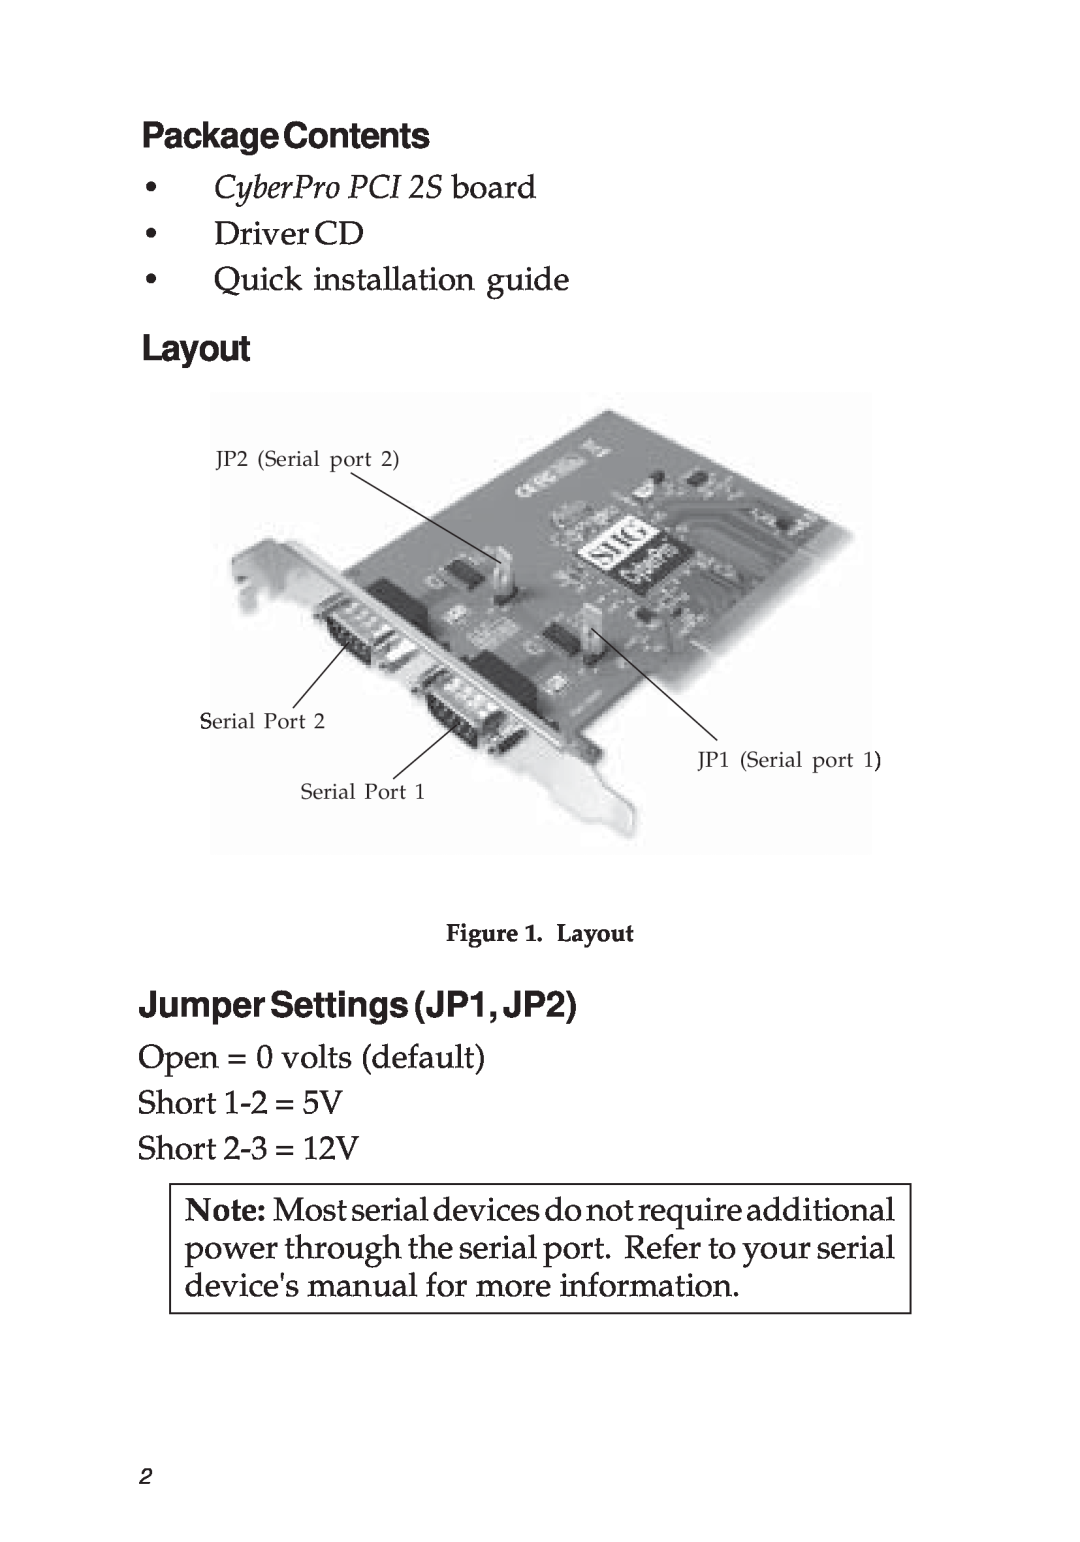 SIIG 04-0341D manual PackageContents, Layout, Jumper Settings JP1, JP2, CyberPro PCI 2S board 